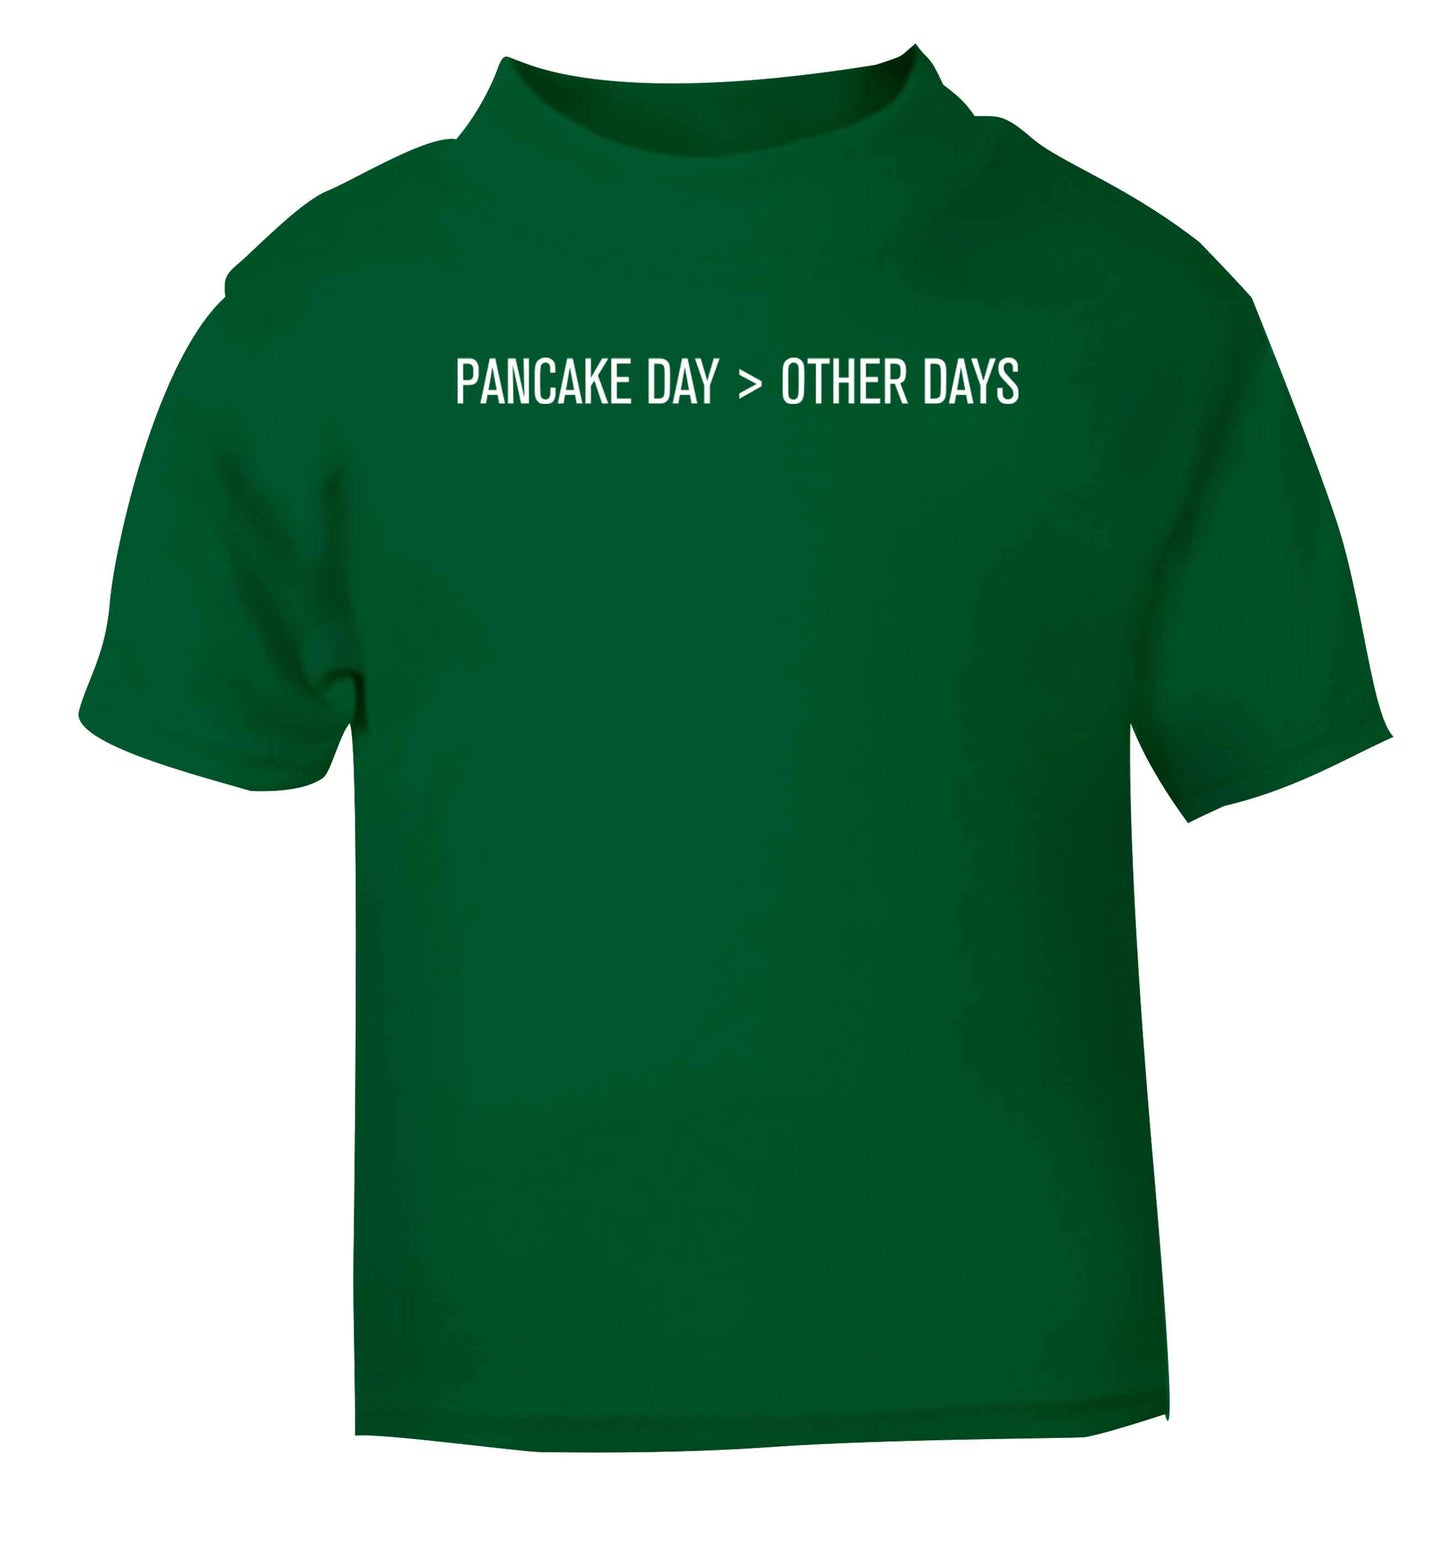 Pancake day > other days green baby toddler Tshirt 2 Years